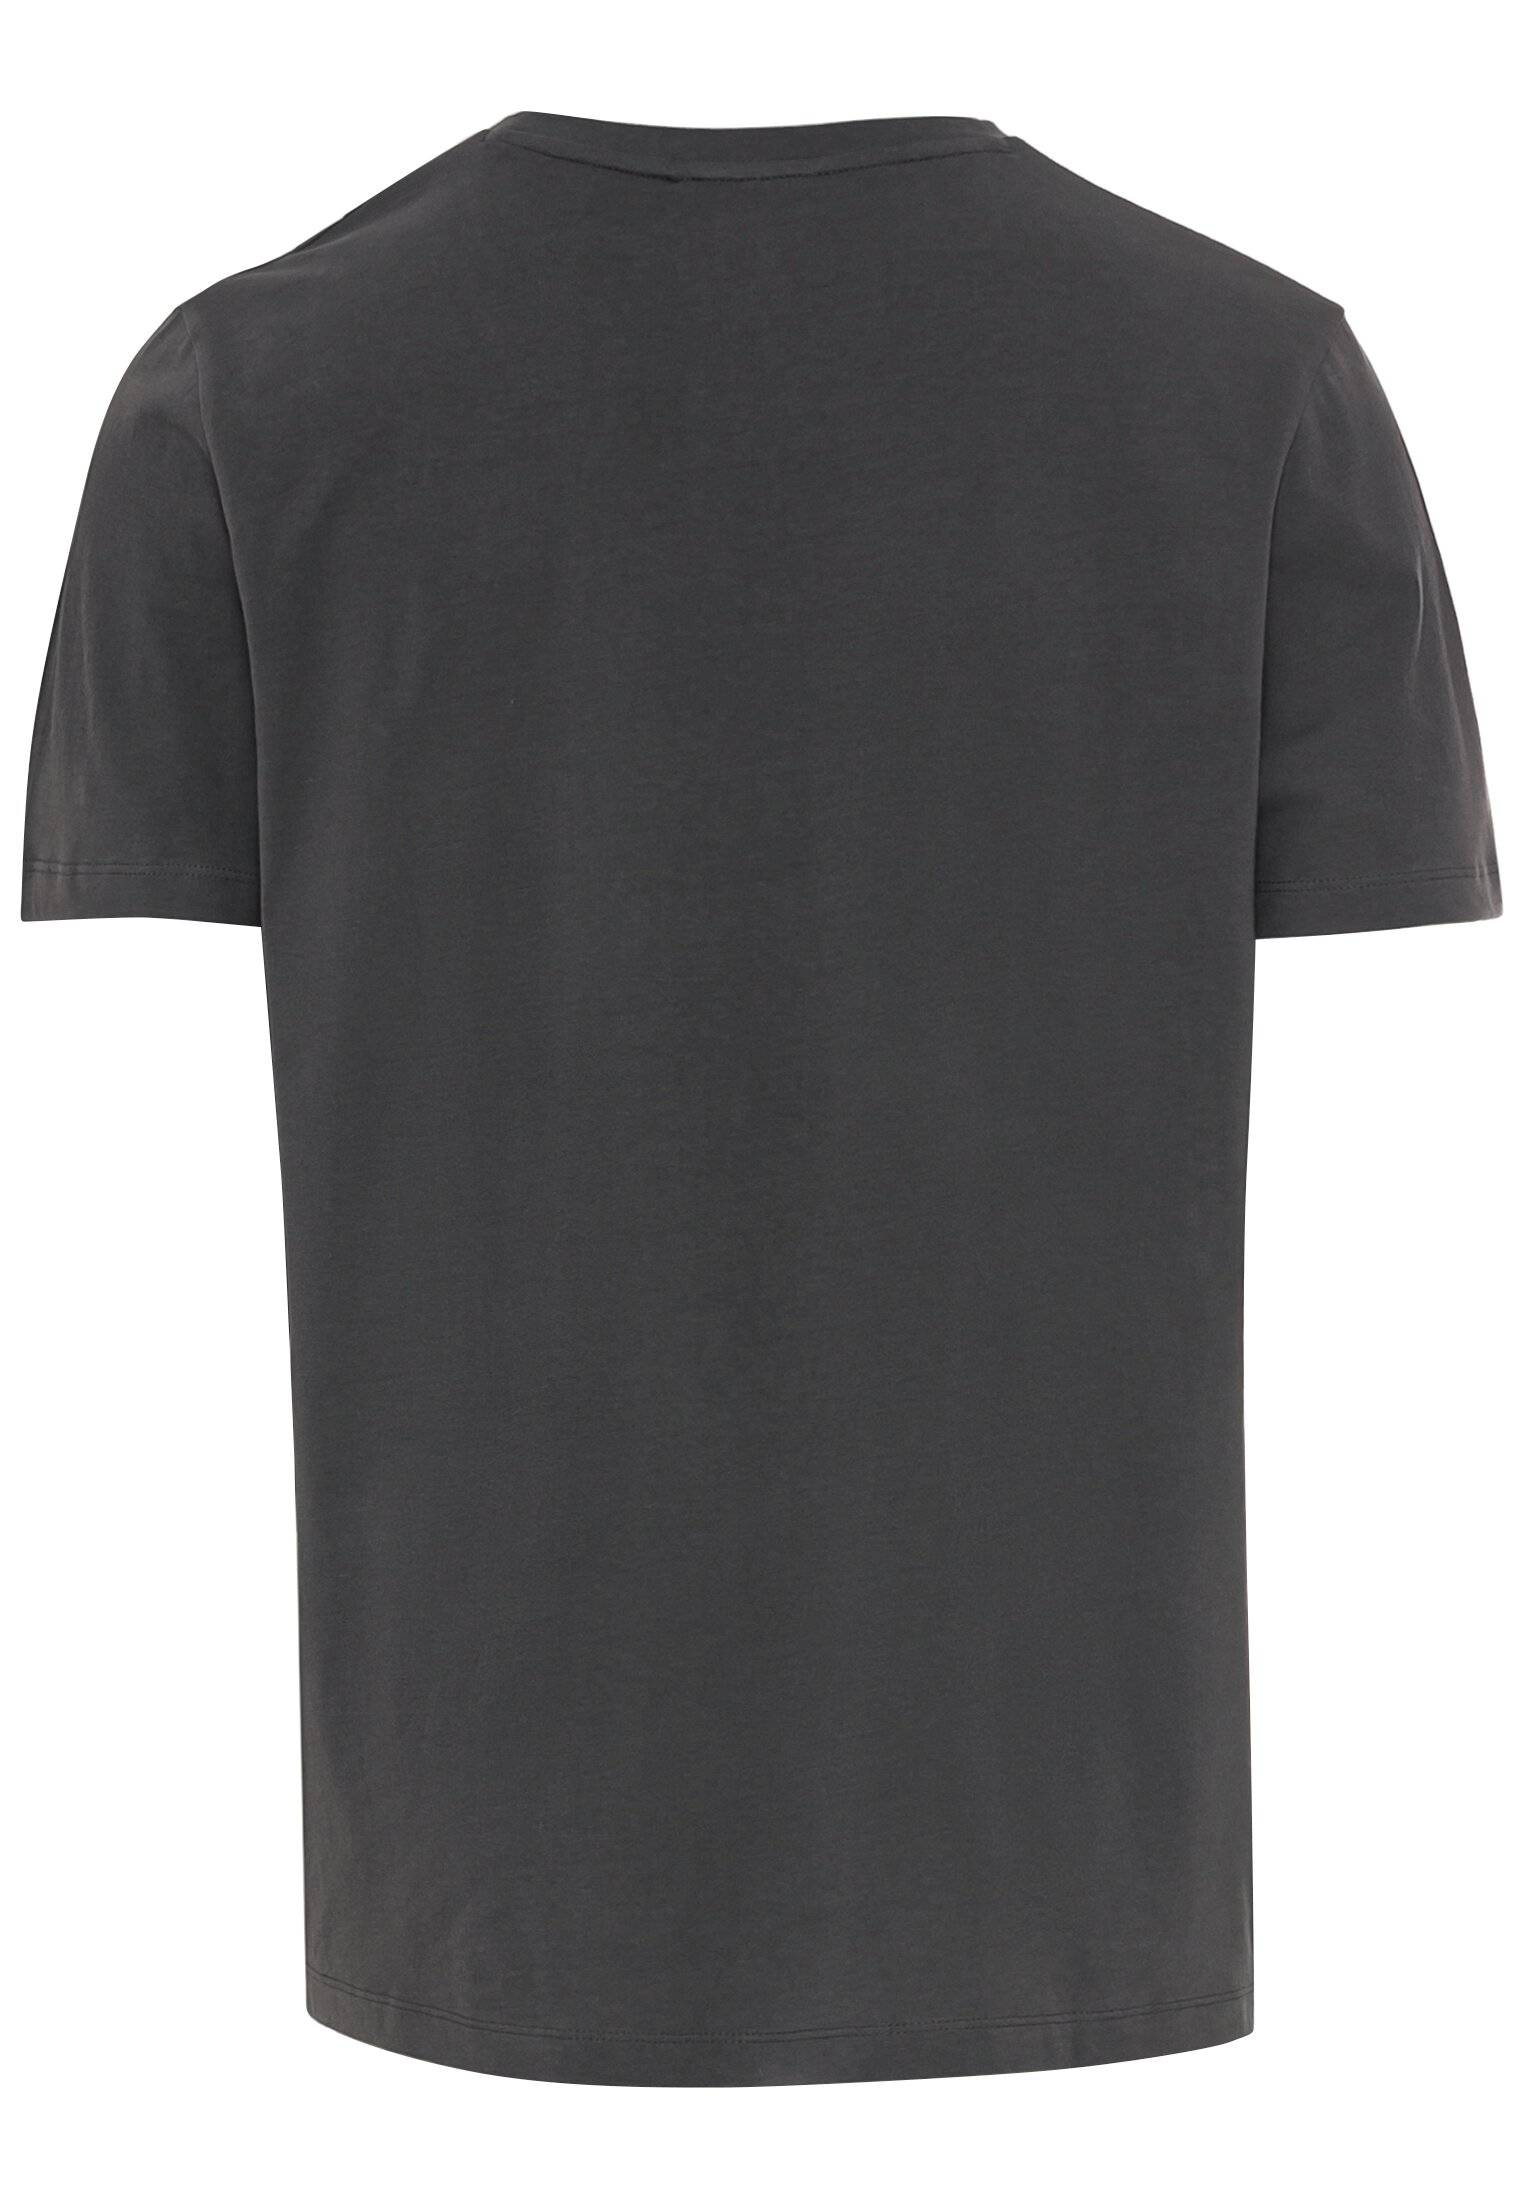 Мужская футболка Camel Active, серая, цвет серый, размер 52 - фото 2